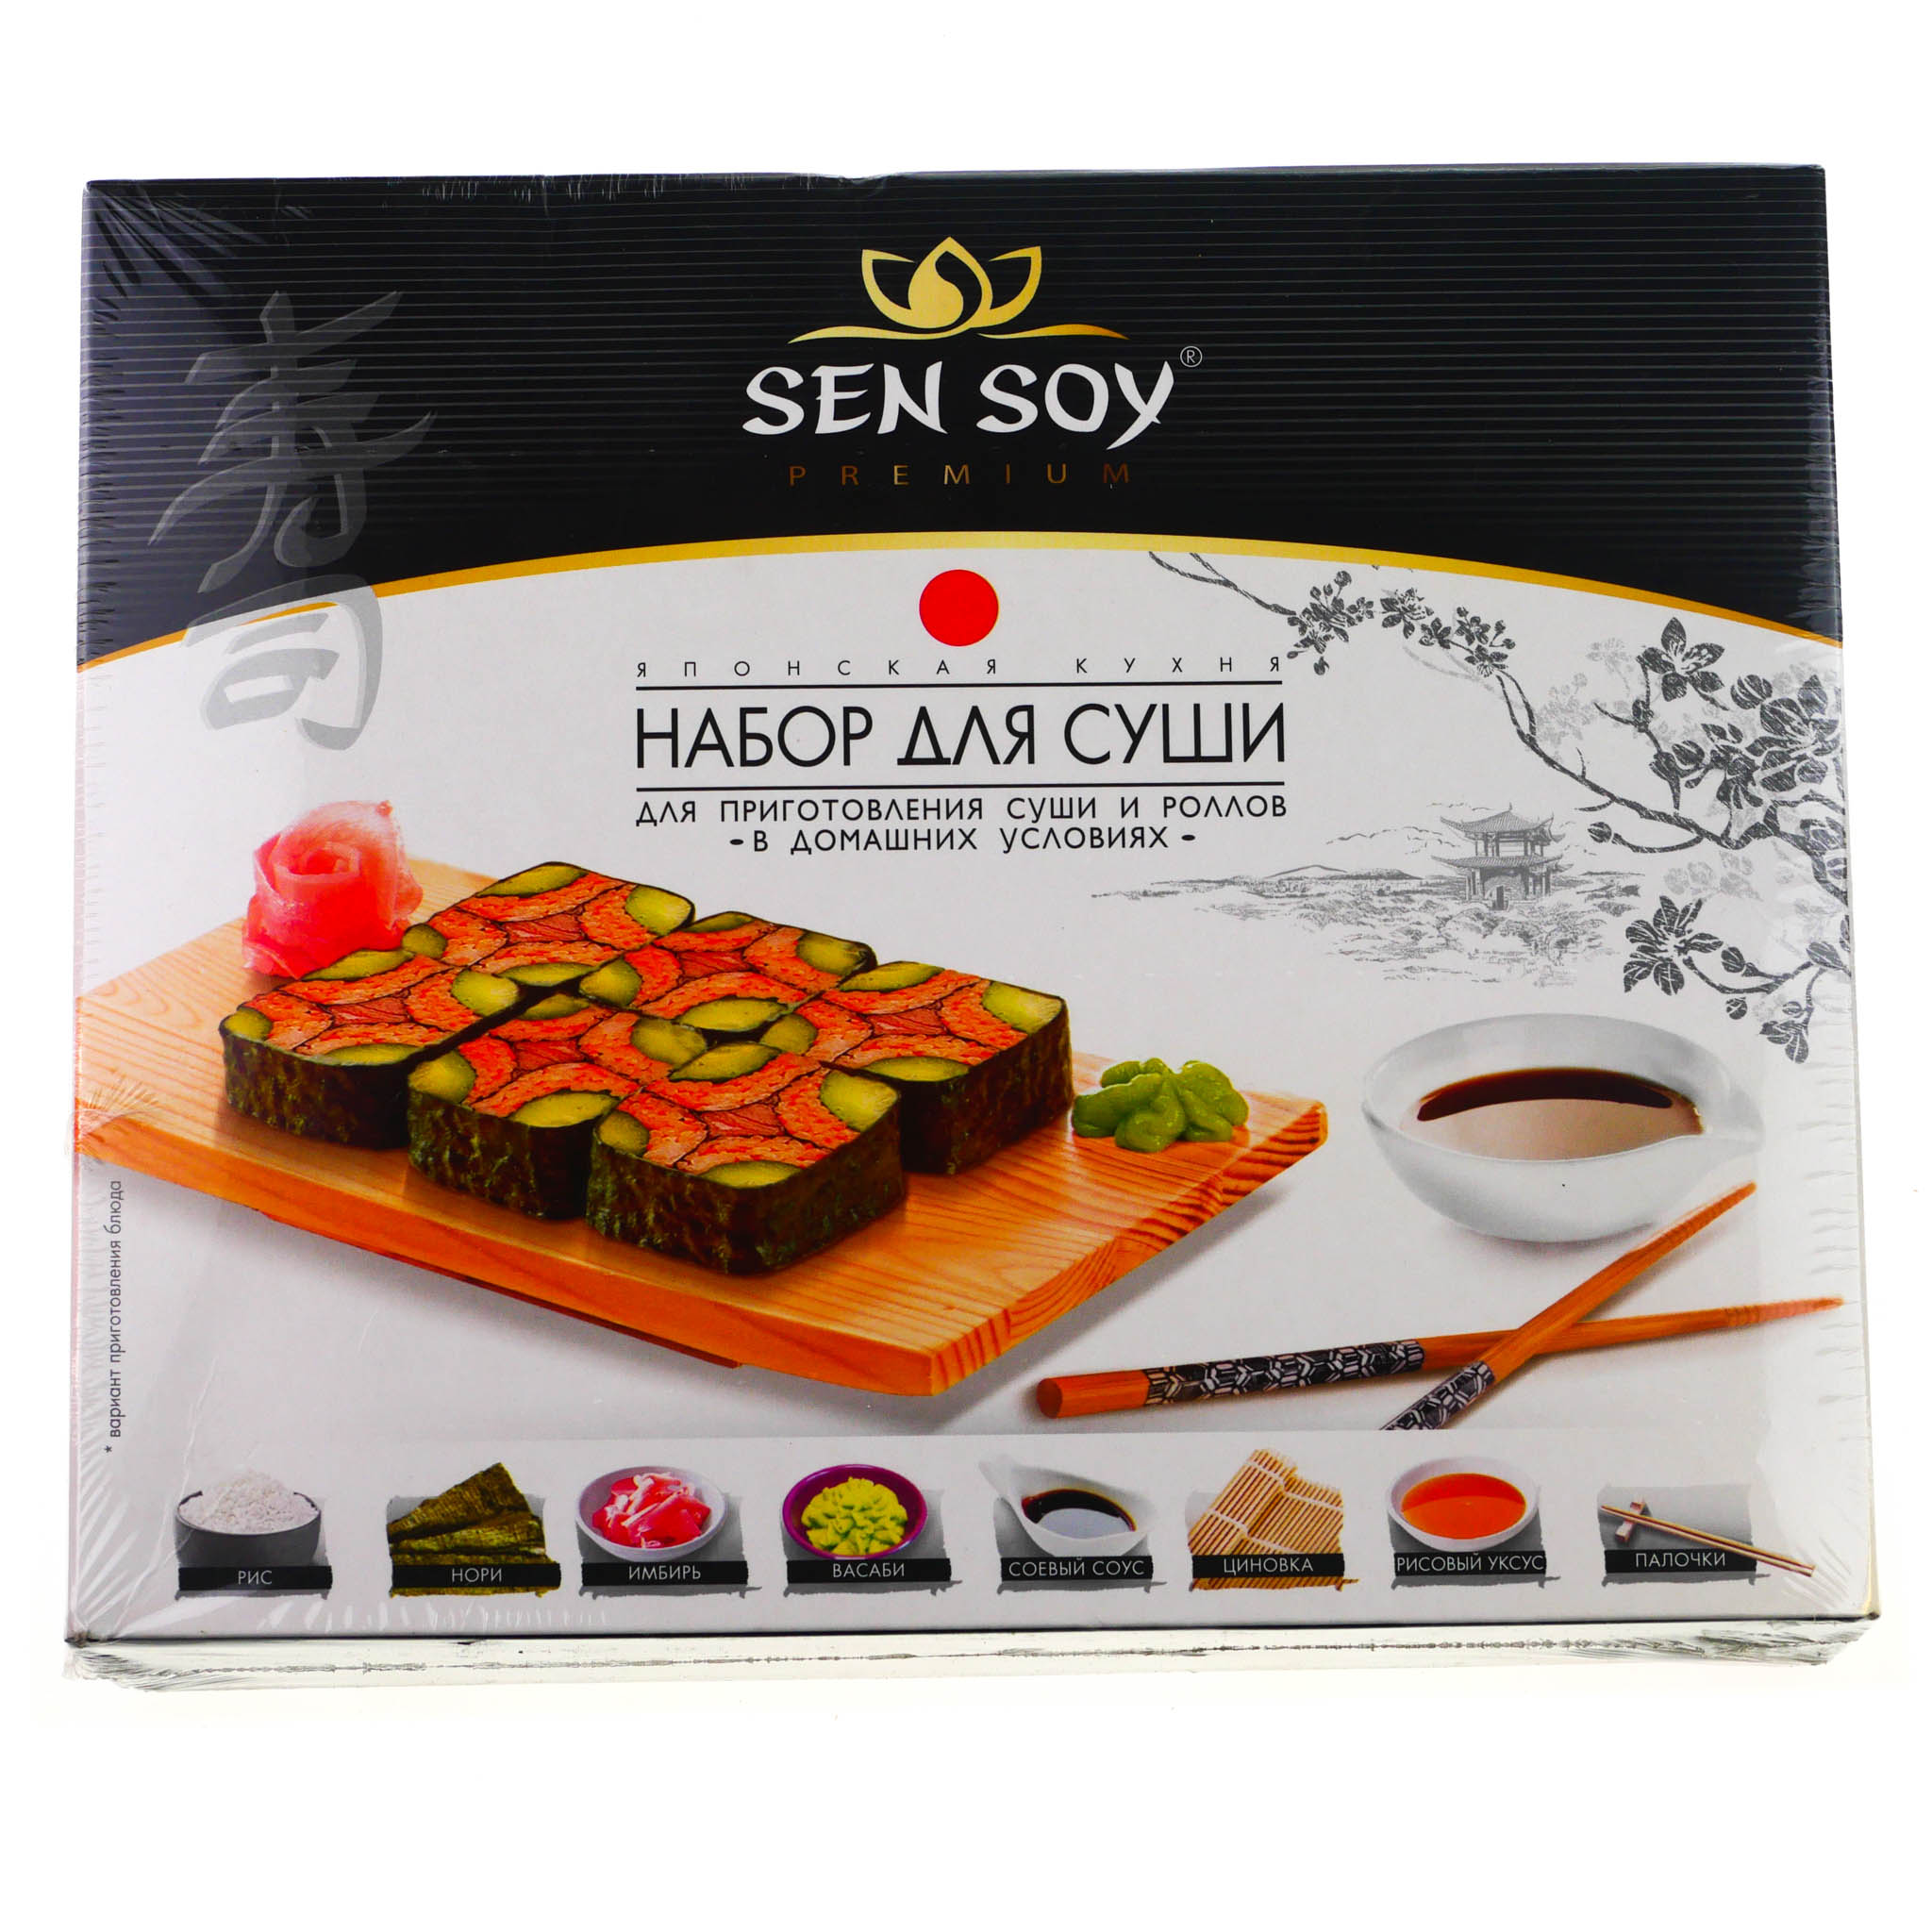 Sen soy набор для суши цена фото 3